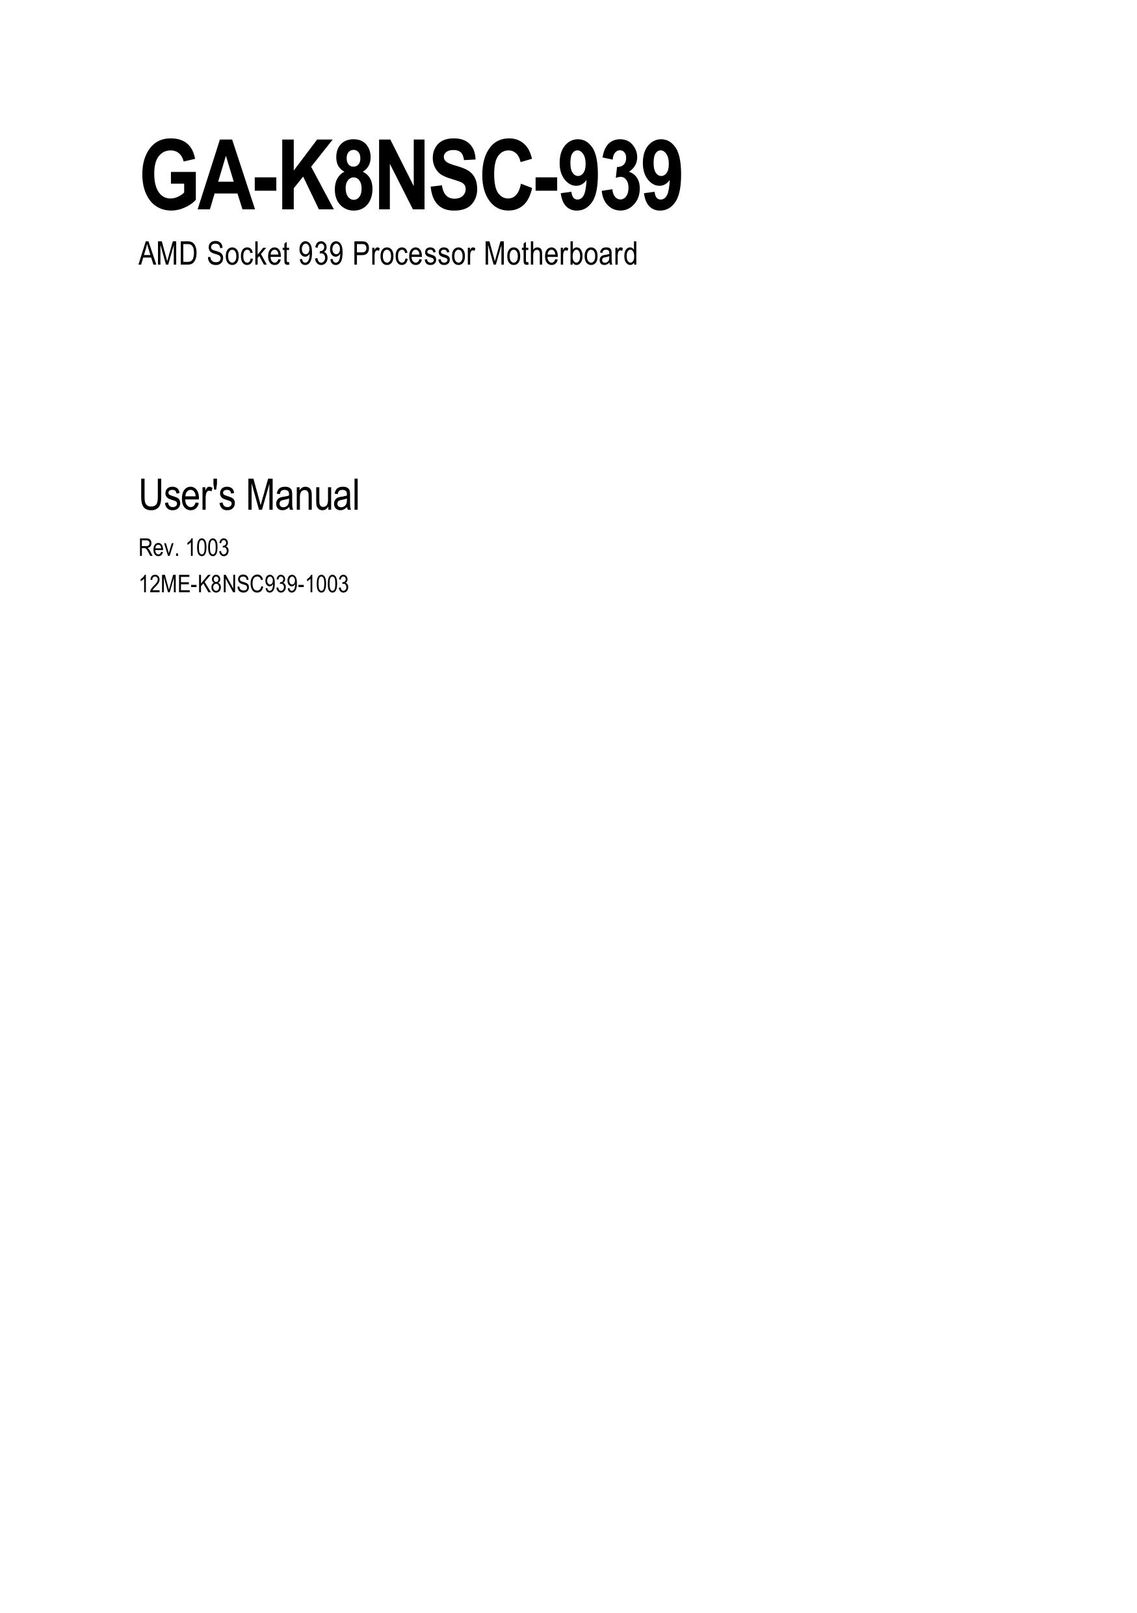 AMD GA-K8NSC-939 Computer Hardware User Manual